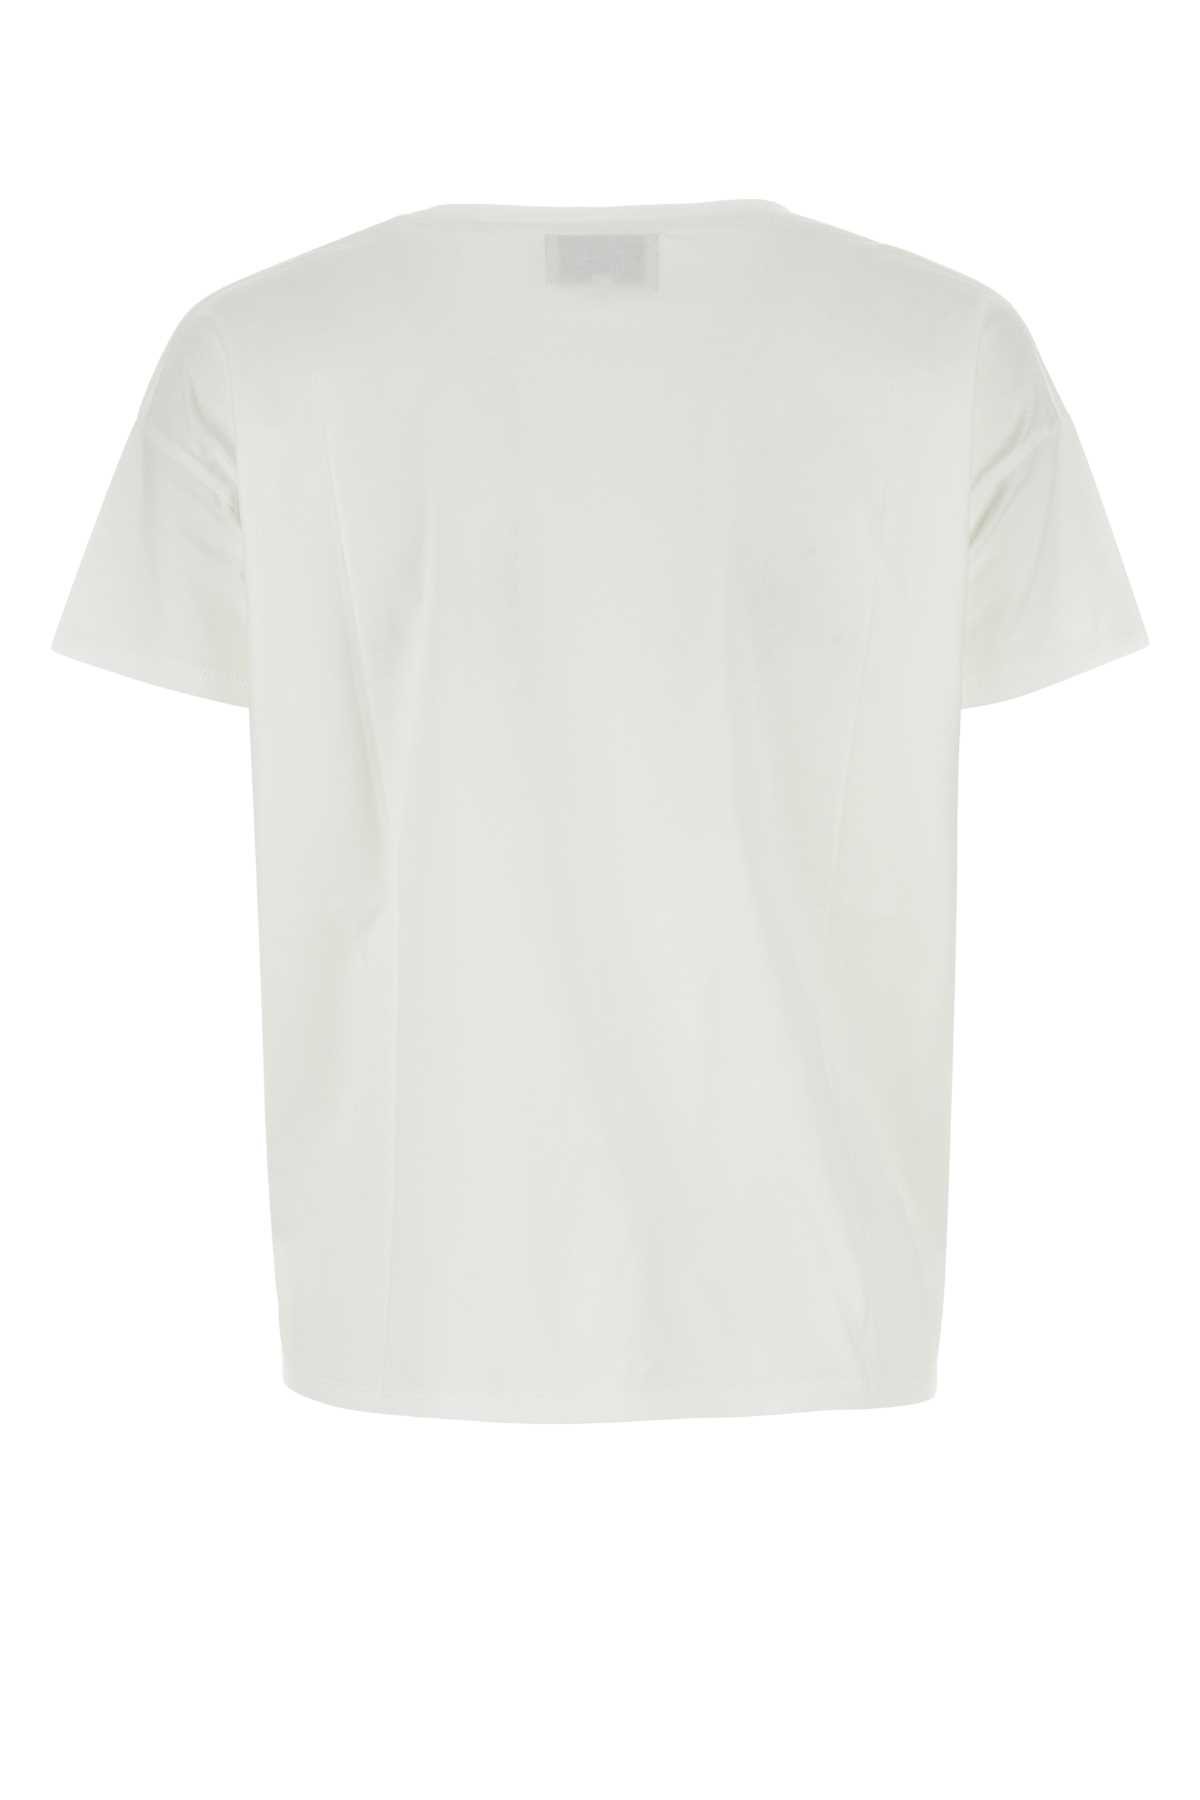 Loulou Studio White Cotton Basiluzzo Oversize T-shirt